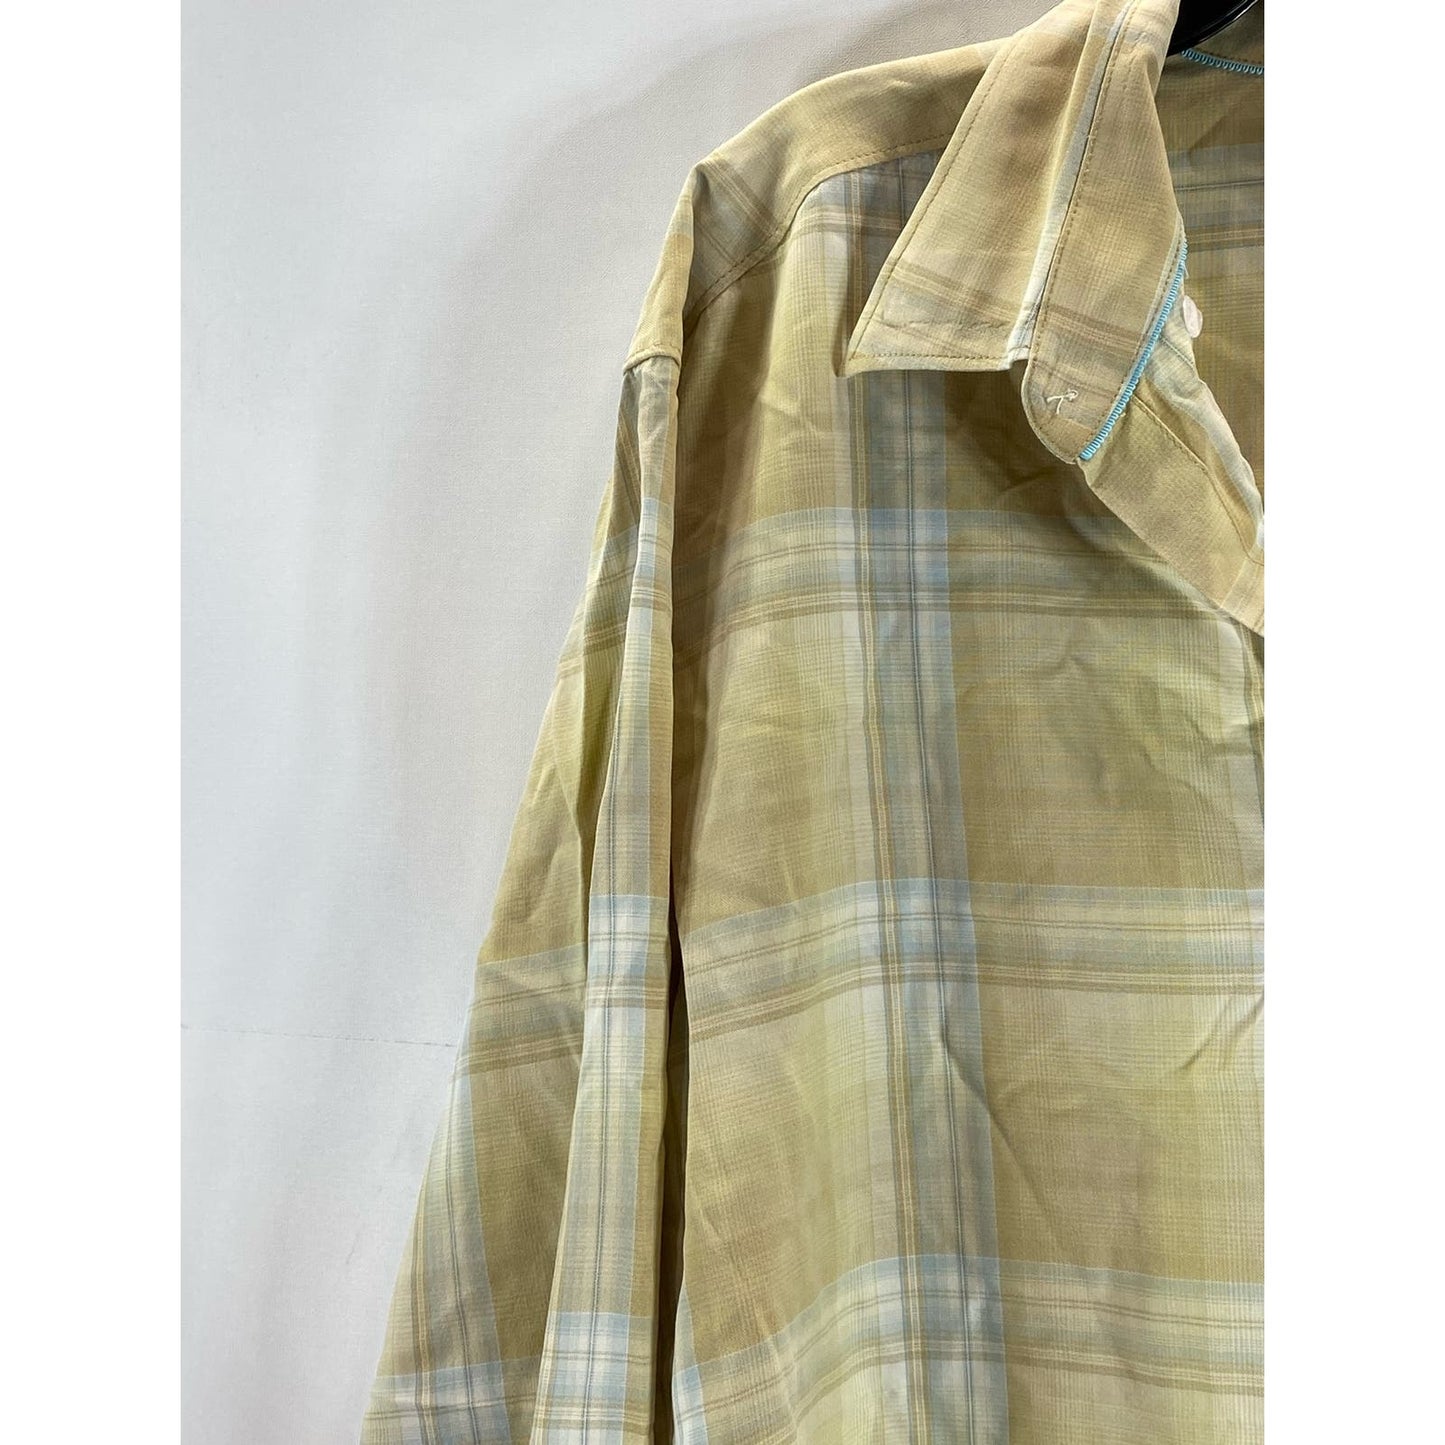 TOMMY BAHAMA Men's Tan Plaid Button-Up Long Sleeve Shirt SZ L